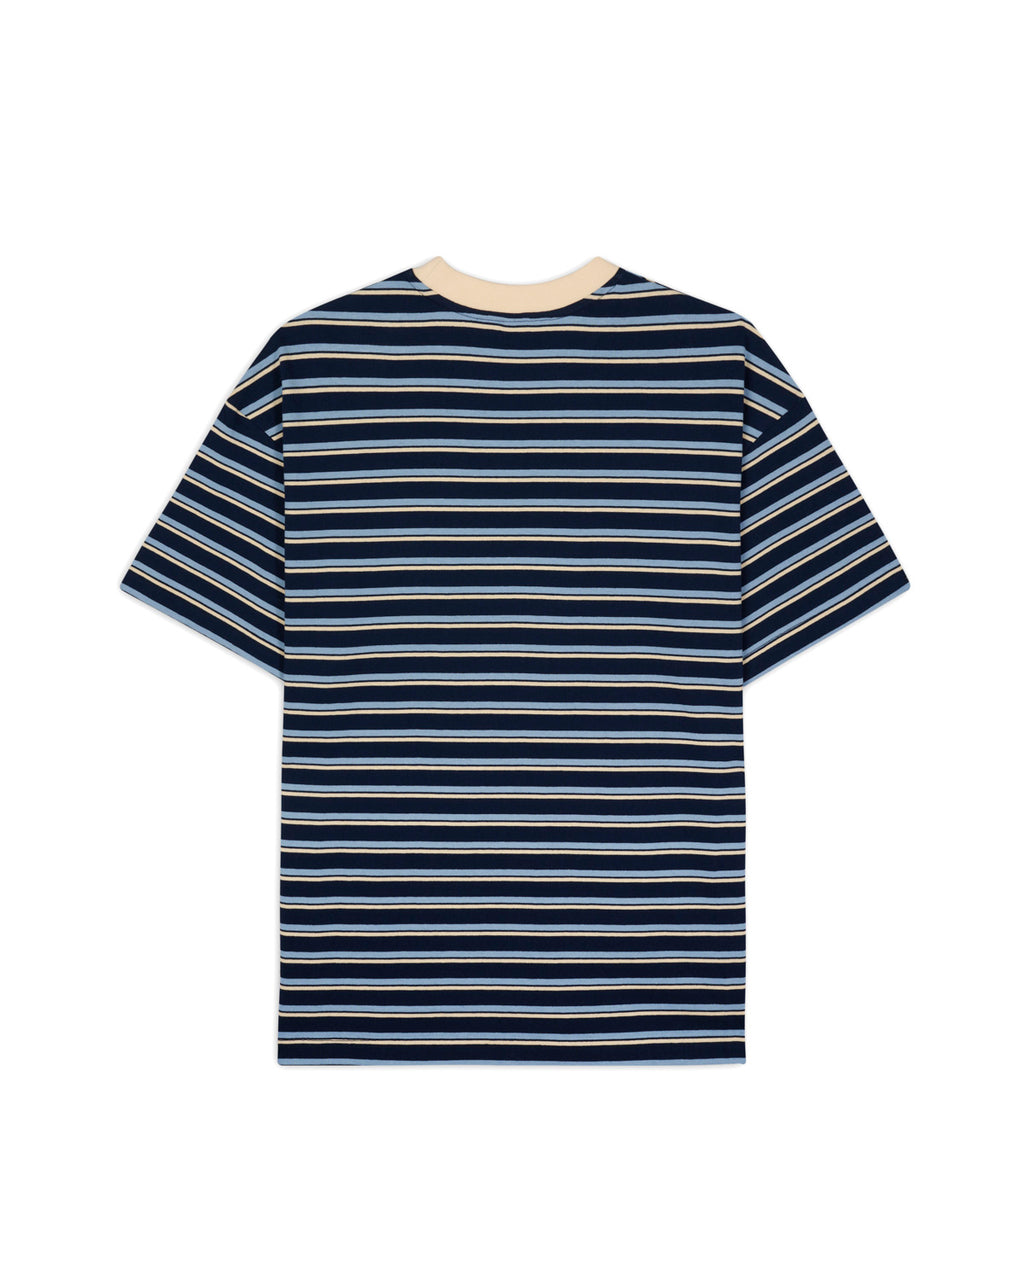 94 Striped T-Shirt - Navy Multi 2